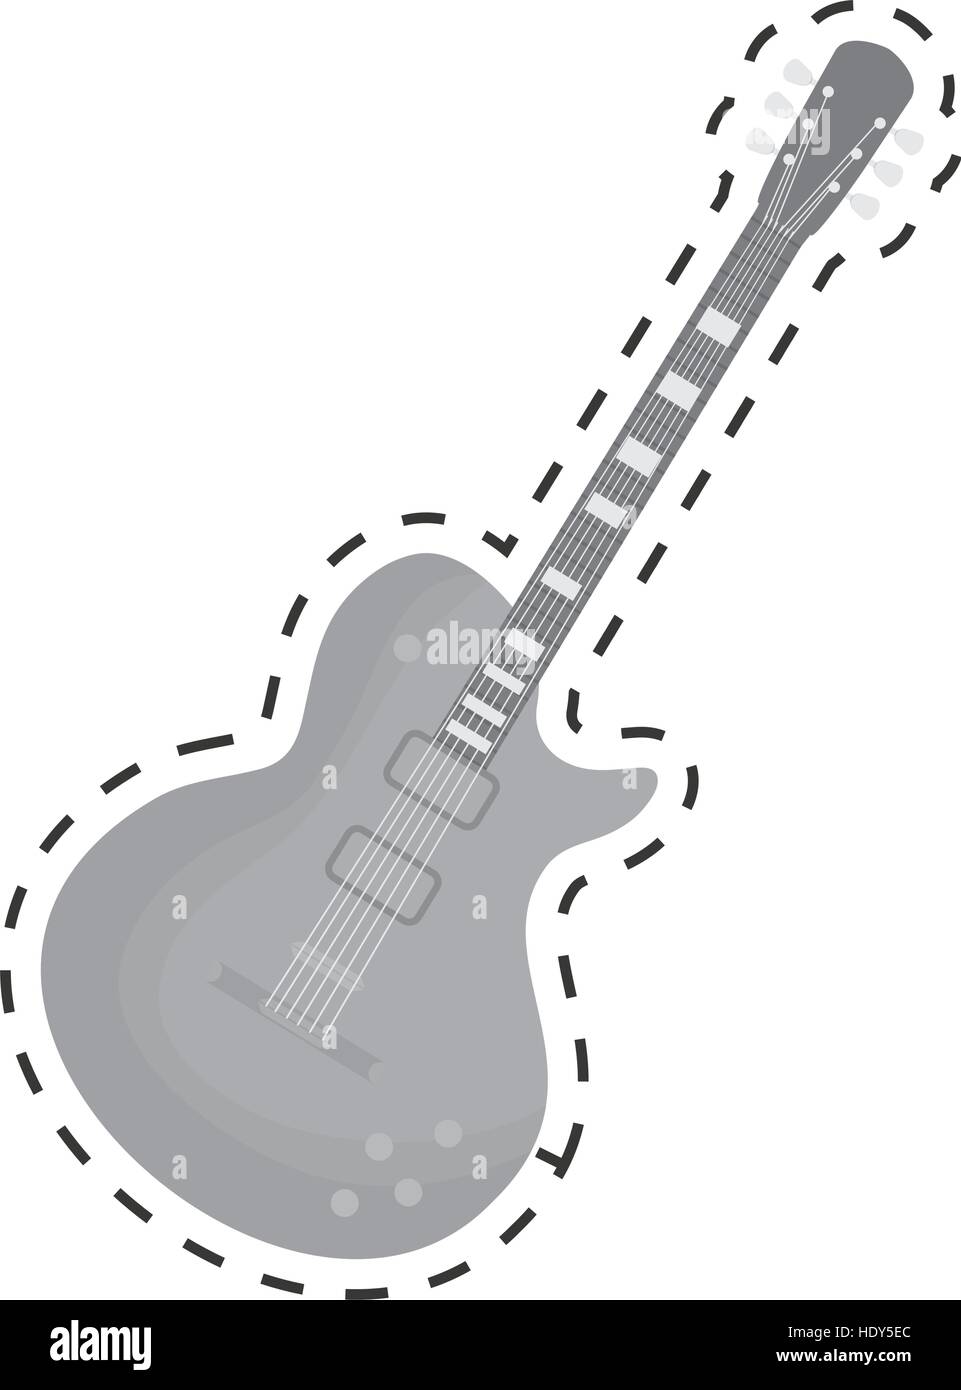 electric guitar icon image vector illustration design Stock Vector